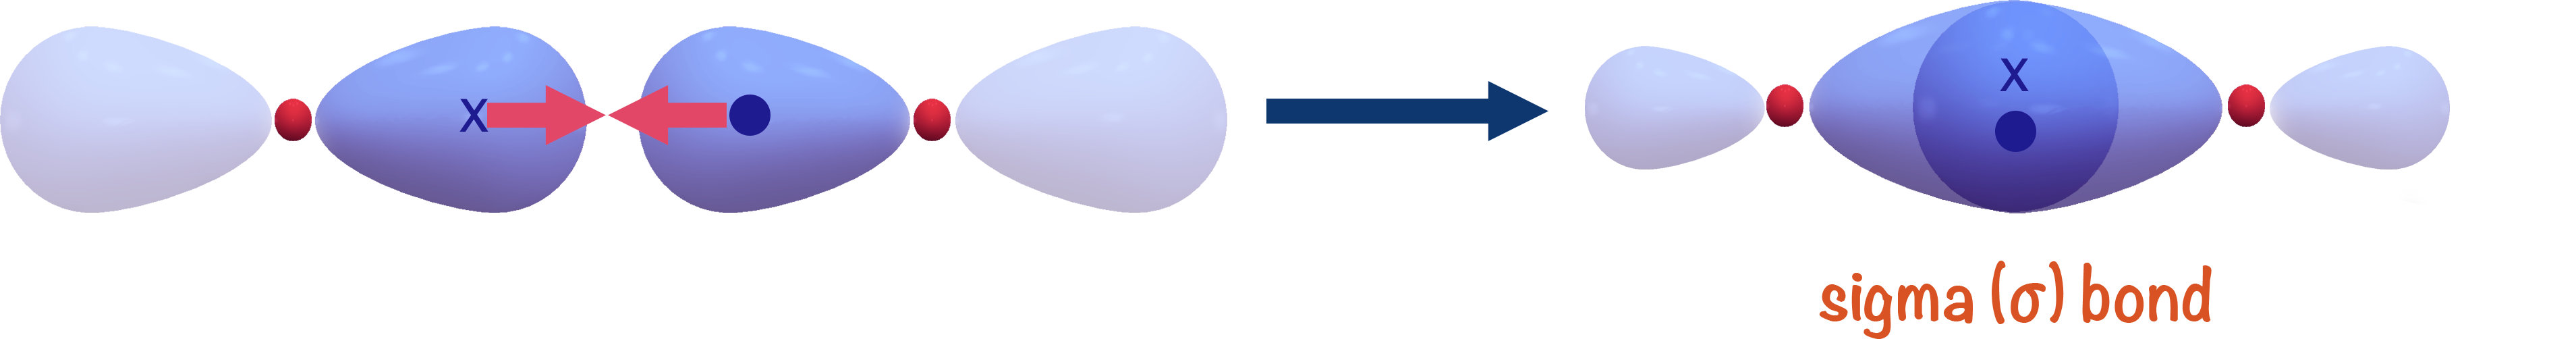 sigma bond direct orbital overlap electron orbitals 